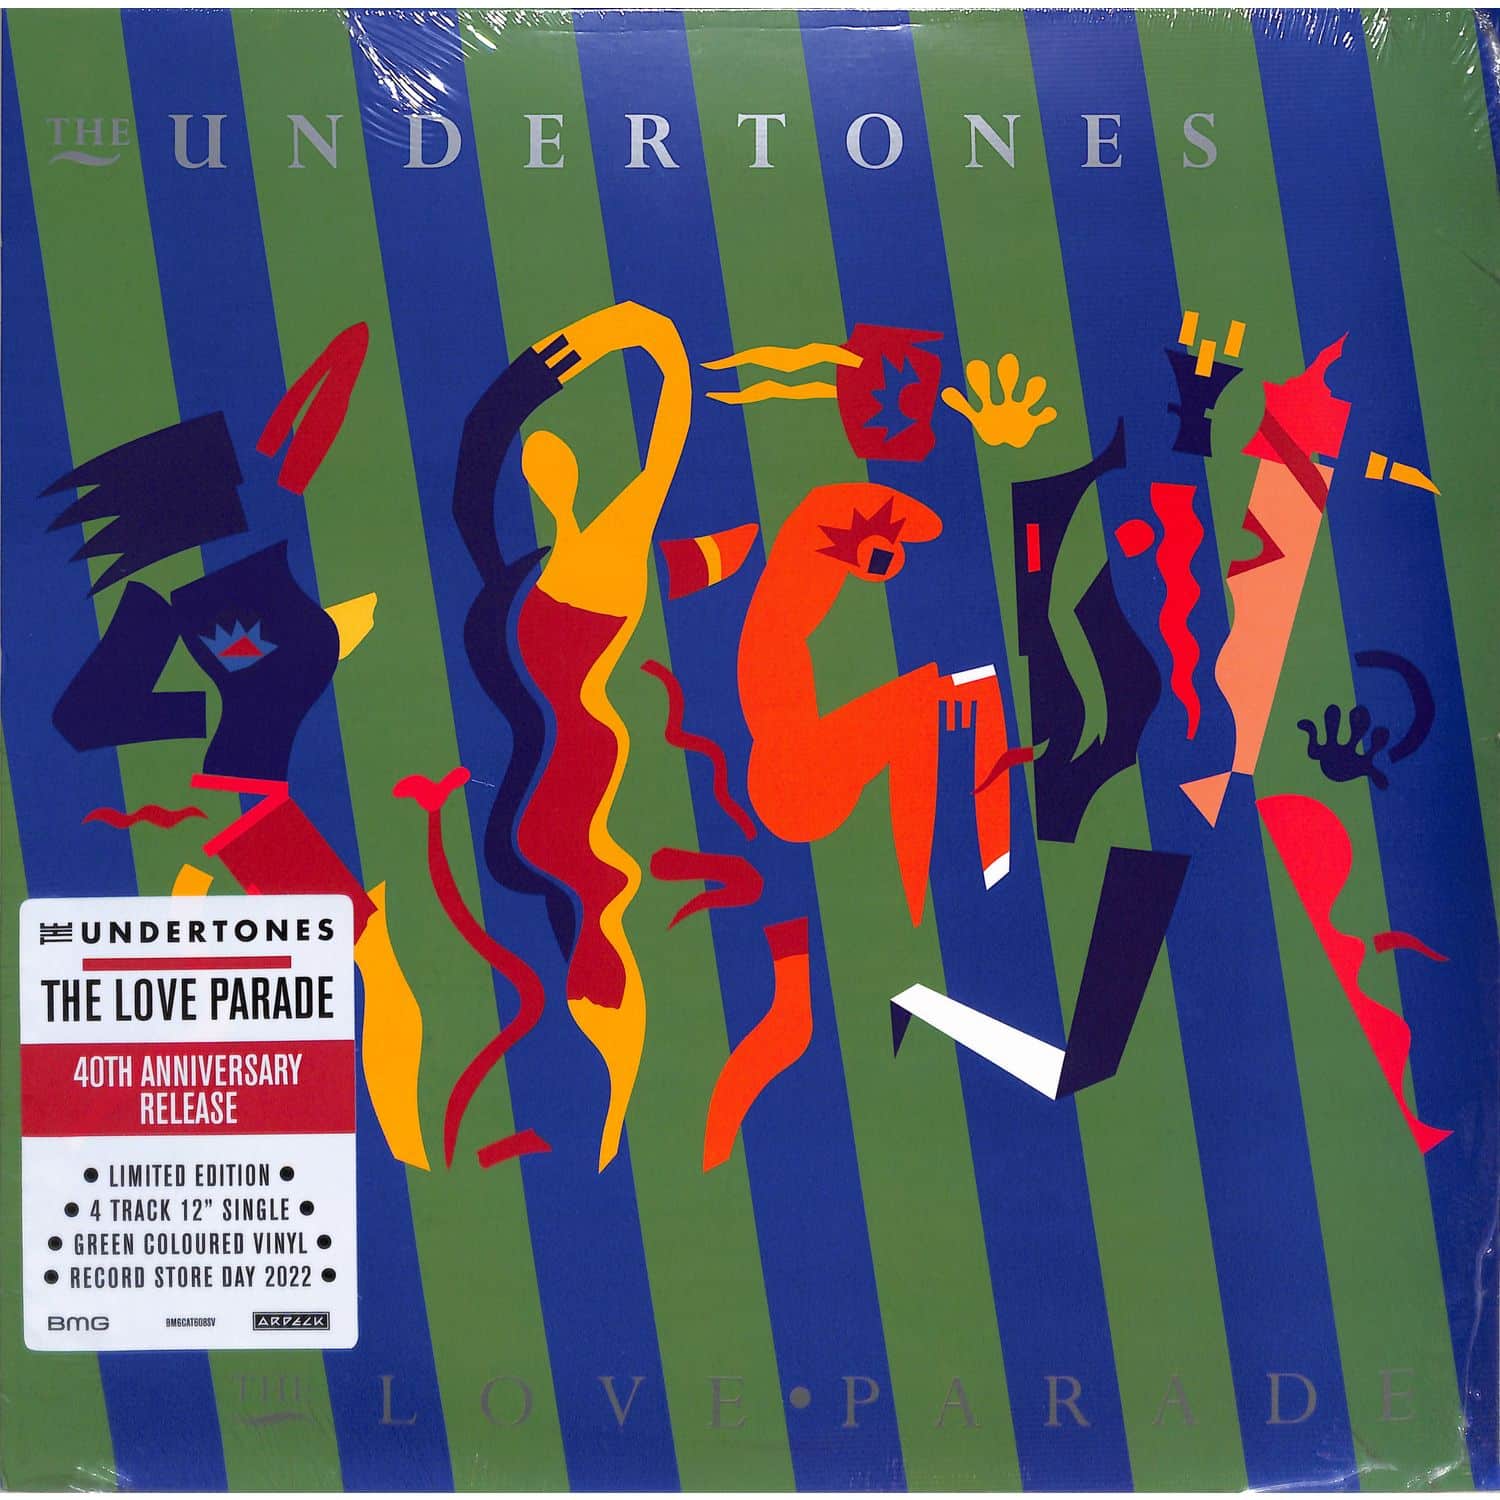 The Undertones - THE LOVE PARADE 